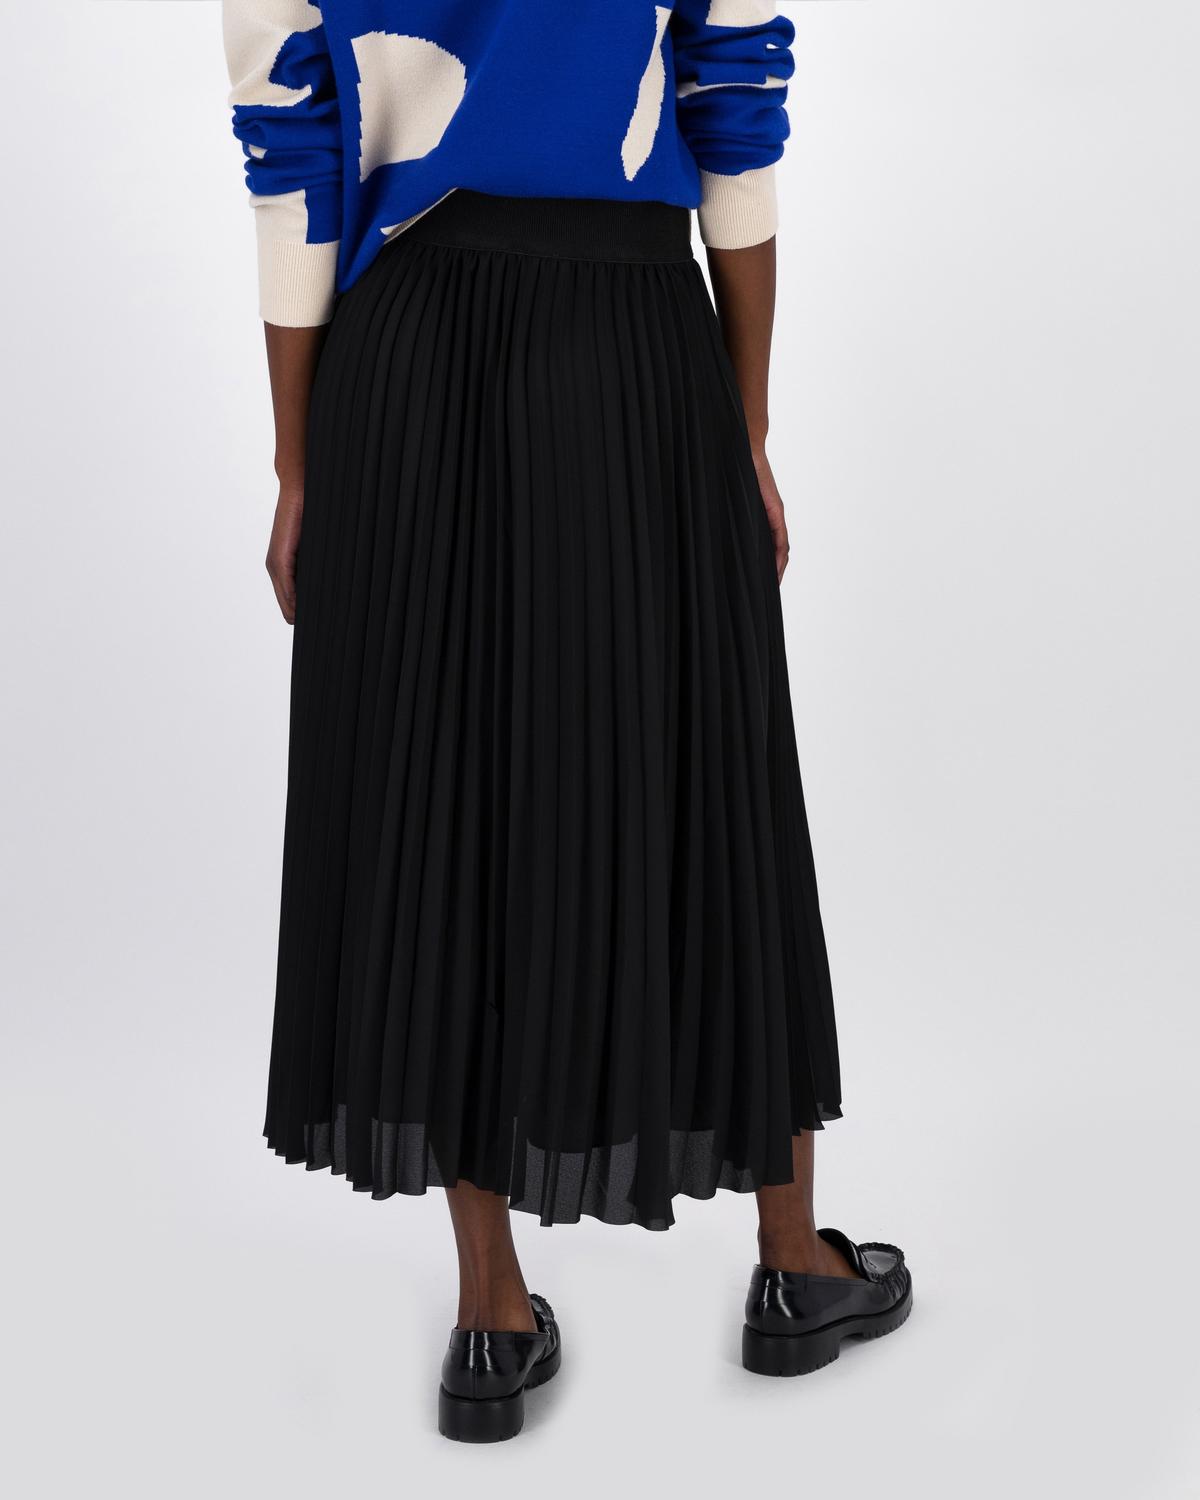 Masego Pleated Skirt -  Black